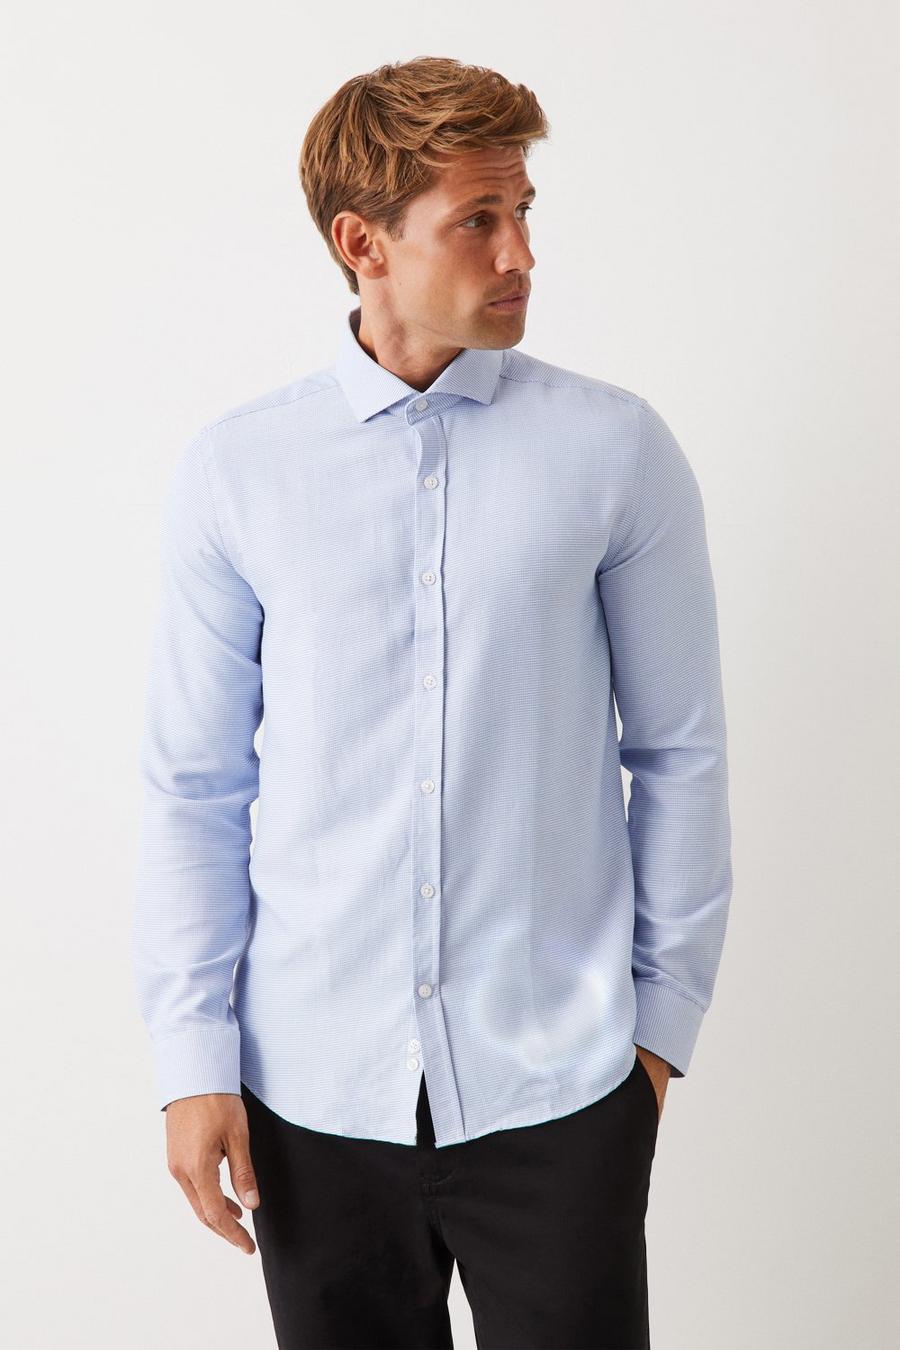 Men's Shirts | Smart, Casual, & Formal Shirts | Burton UK